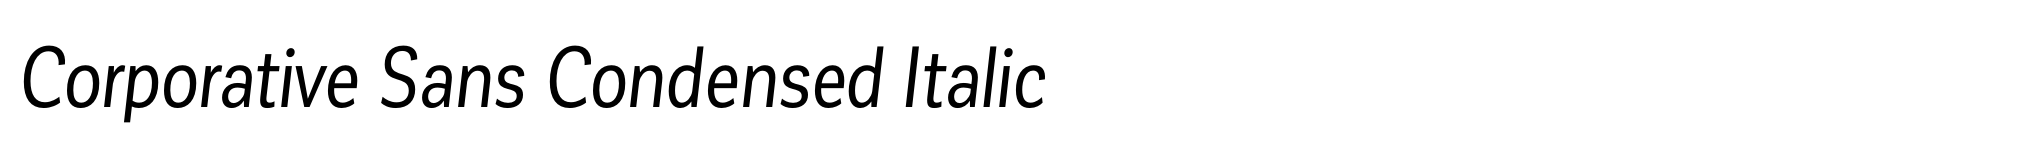 Corporative Sans Condensed Italic image